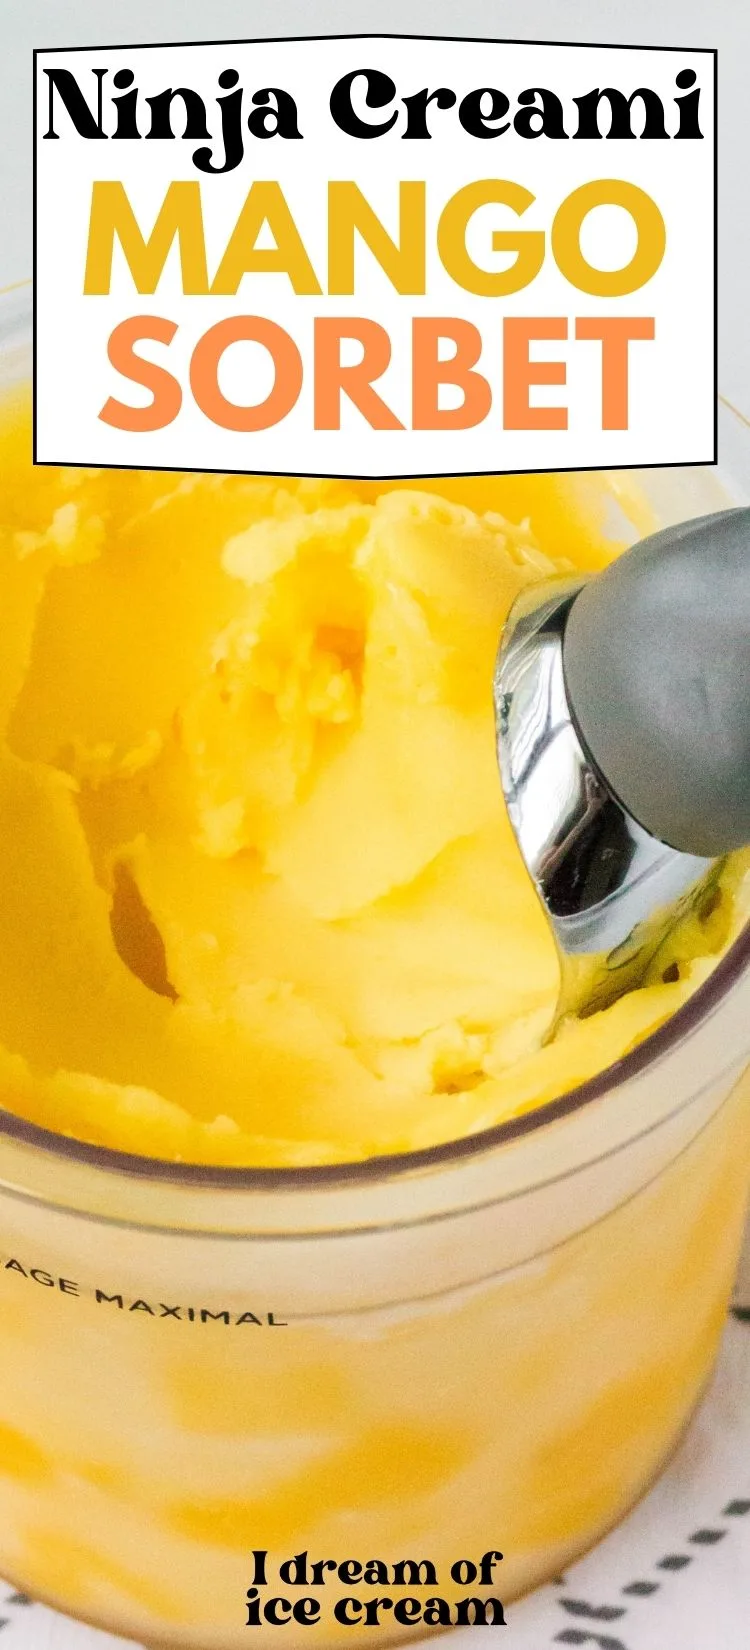 close-up of an ice cream scoop in a ninja creami pint of mango sorbet